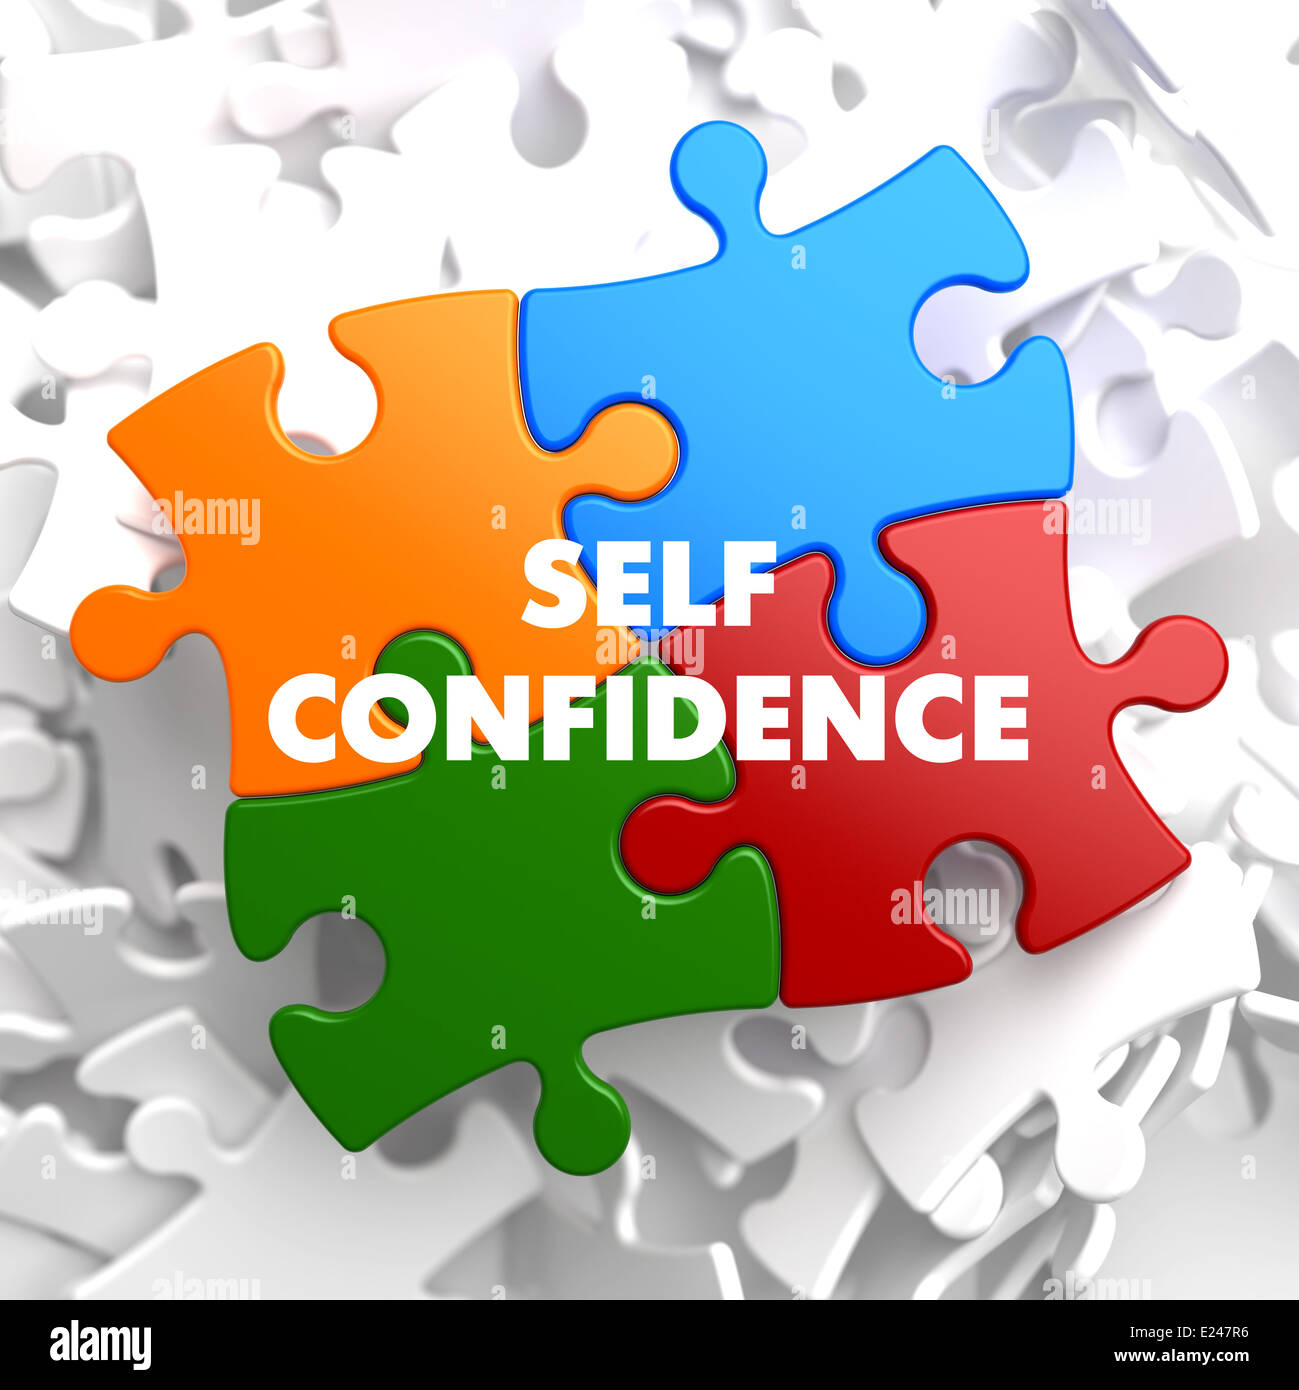 Self Confidence on Multicolor Puzzle. Stock Photo